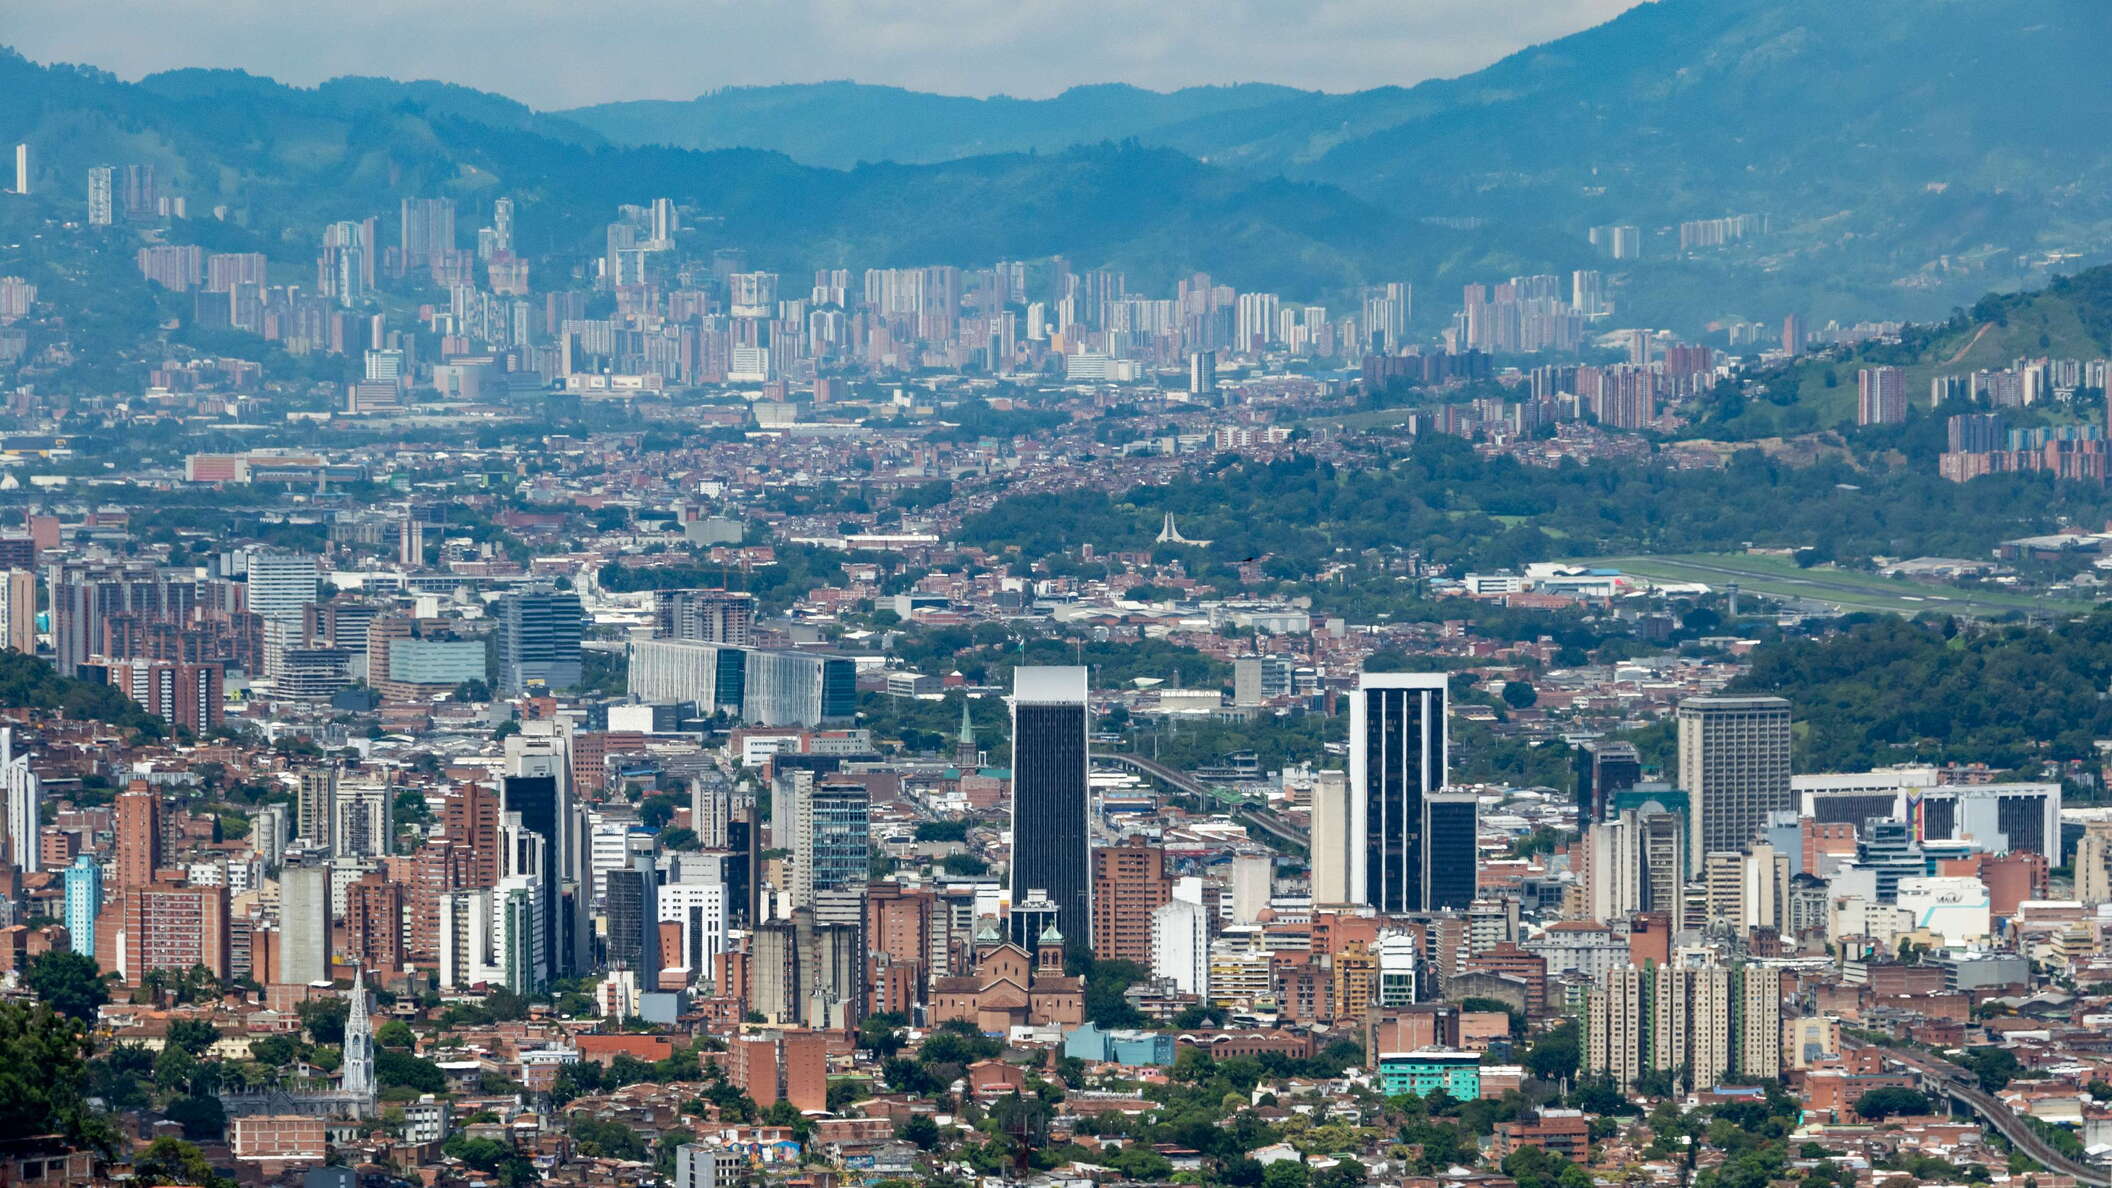 Aburrá Valley with Medellín and Sabaneta